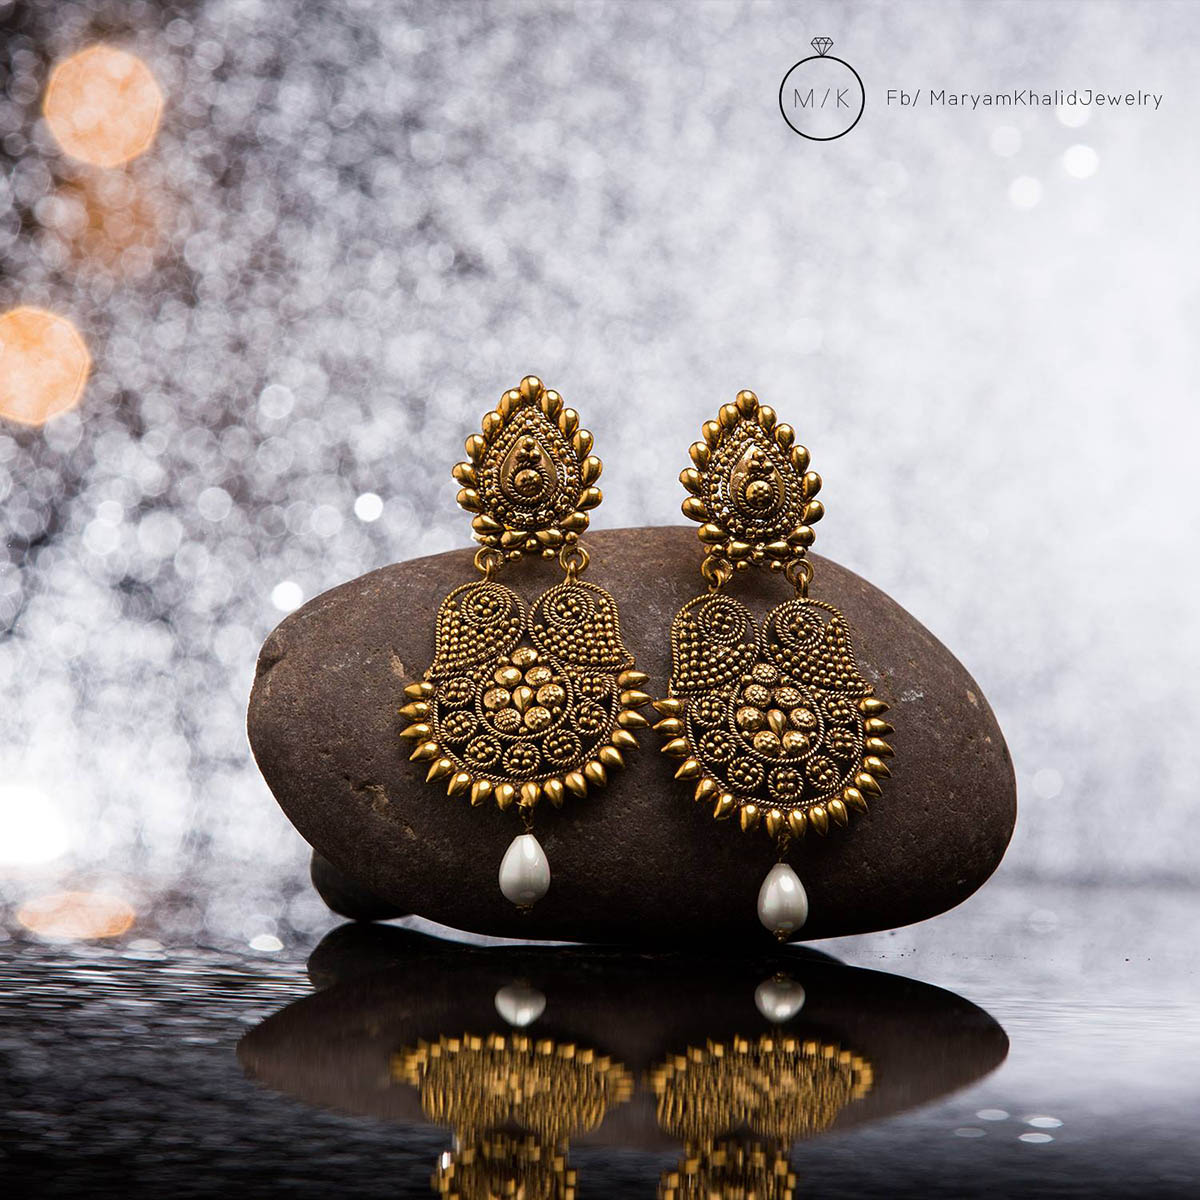 Maryam Khalid Jewelry